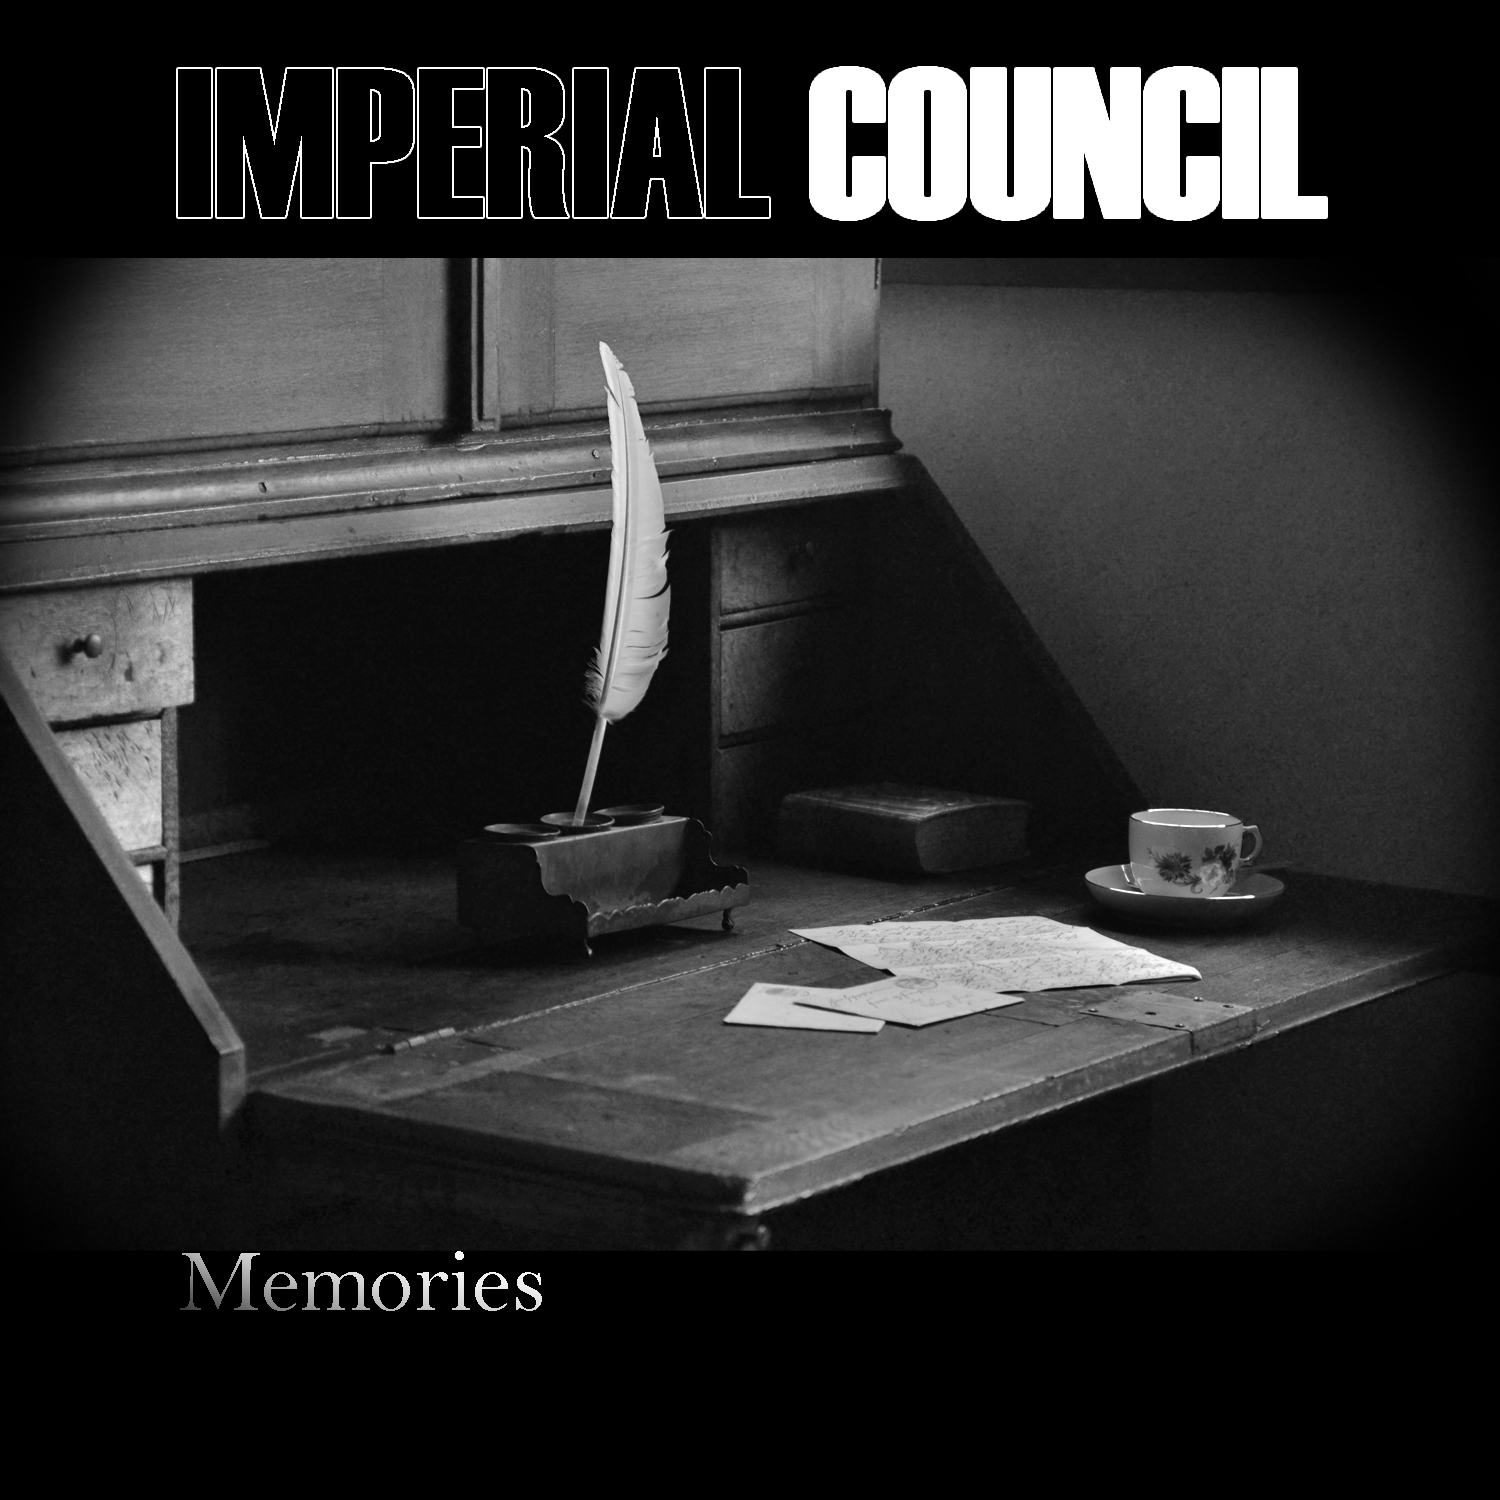 ImperialCouncil Memories